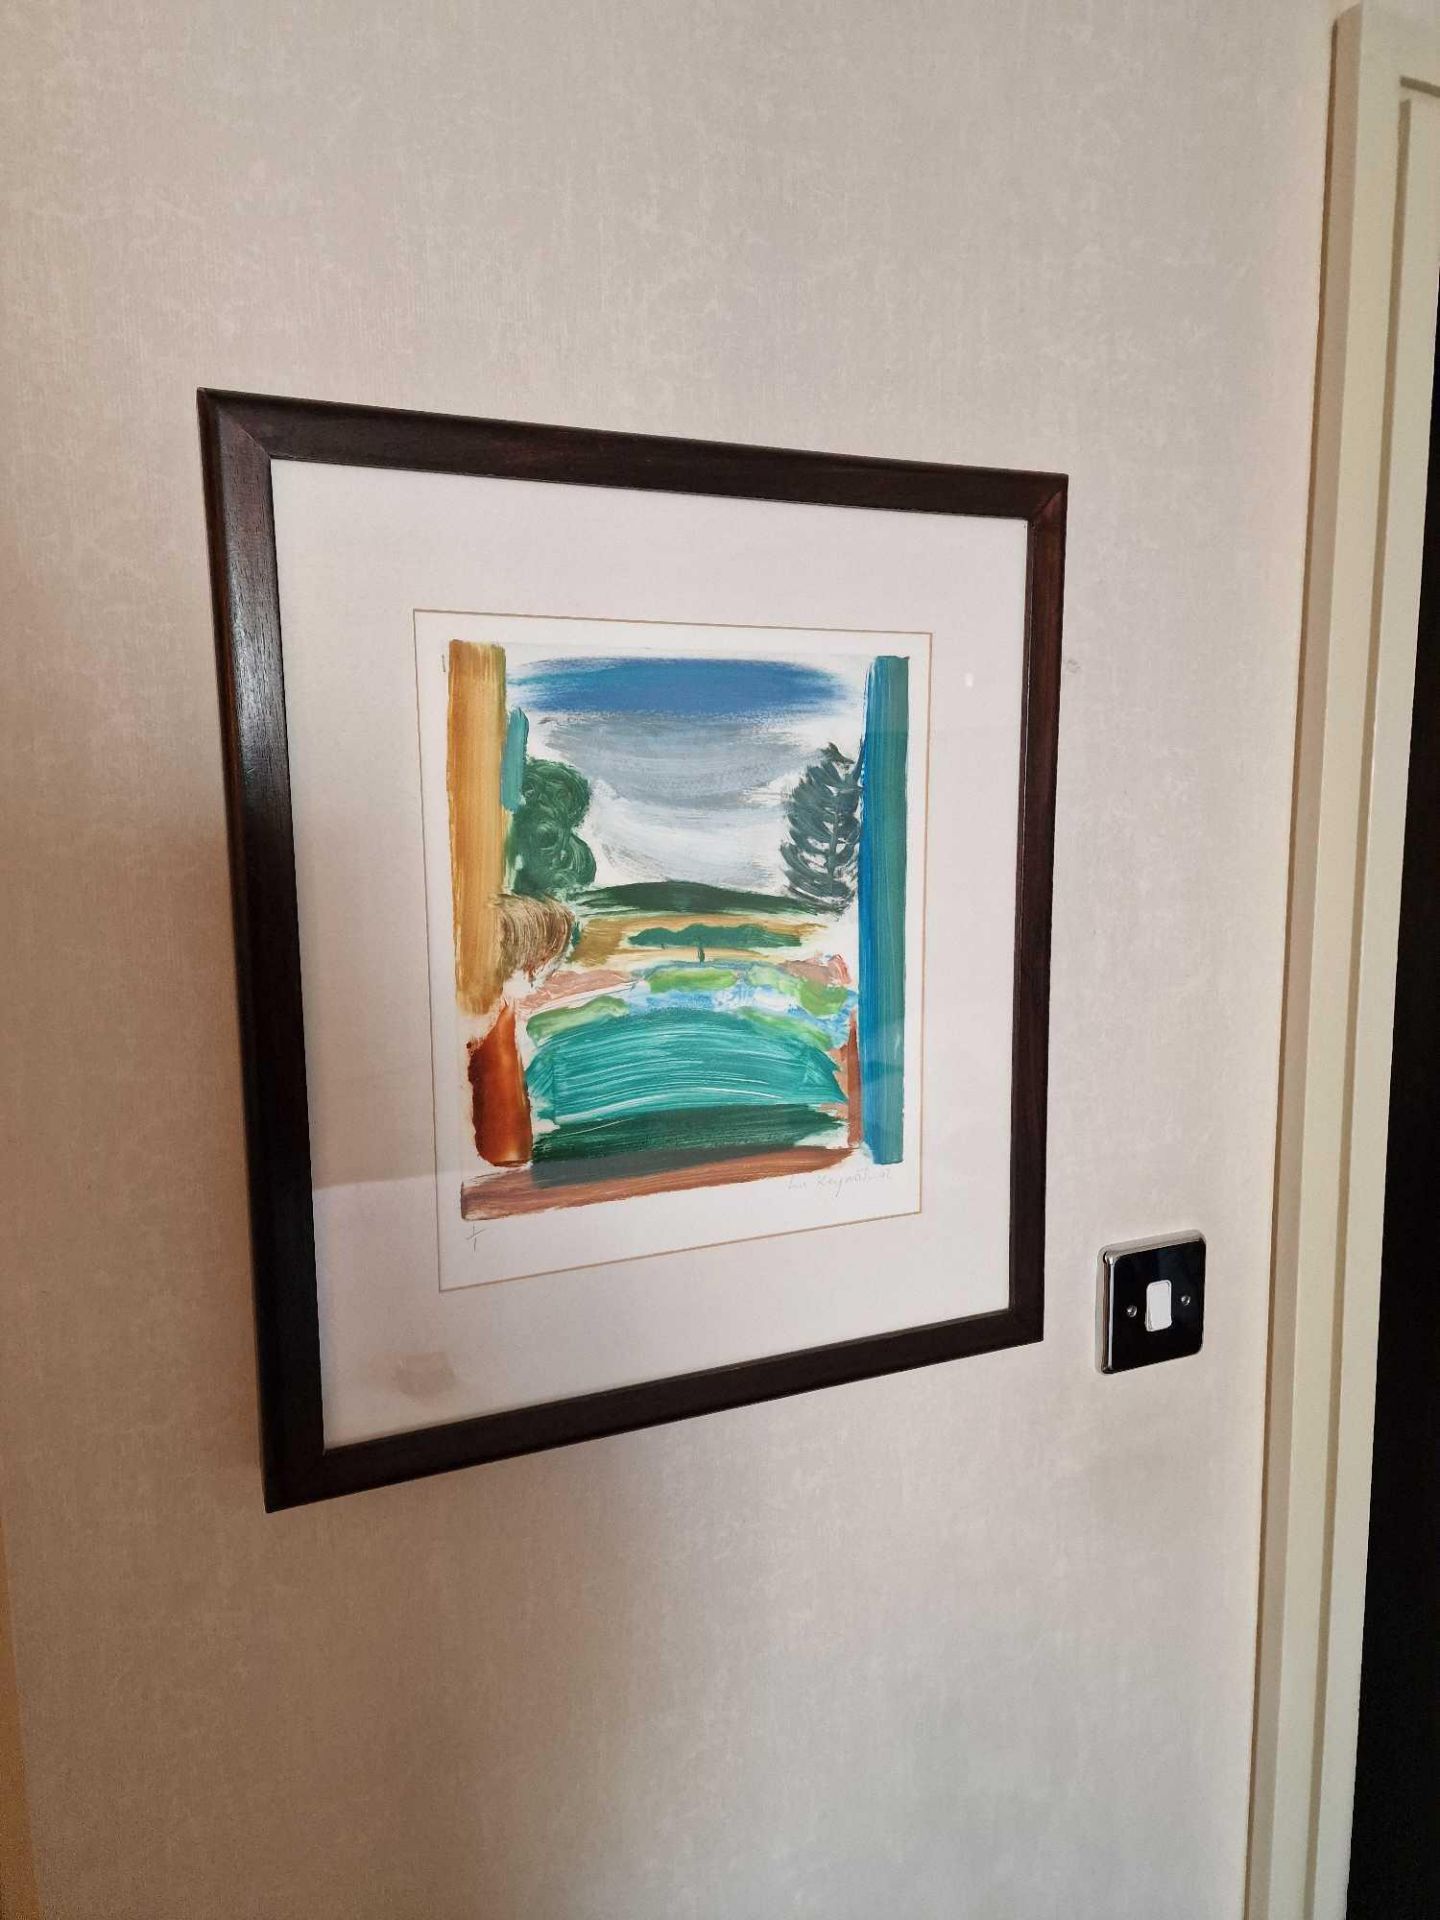 Liz Keyworth (British) framed art signed and dated 2002 1/1 in walnut coloured frame 44 x 50cm (Room